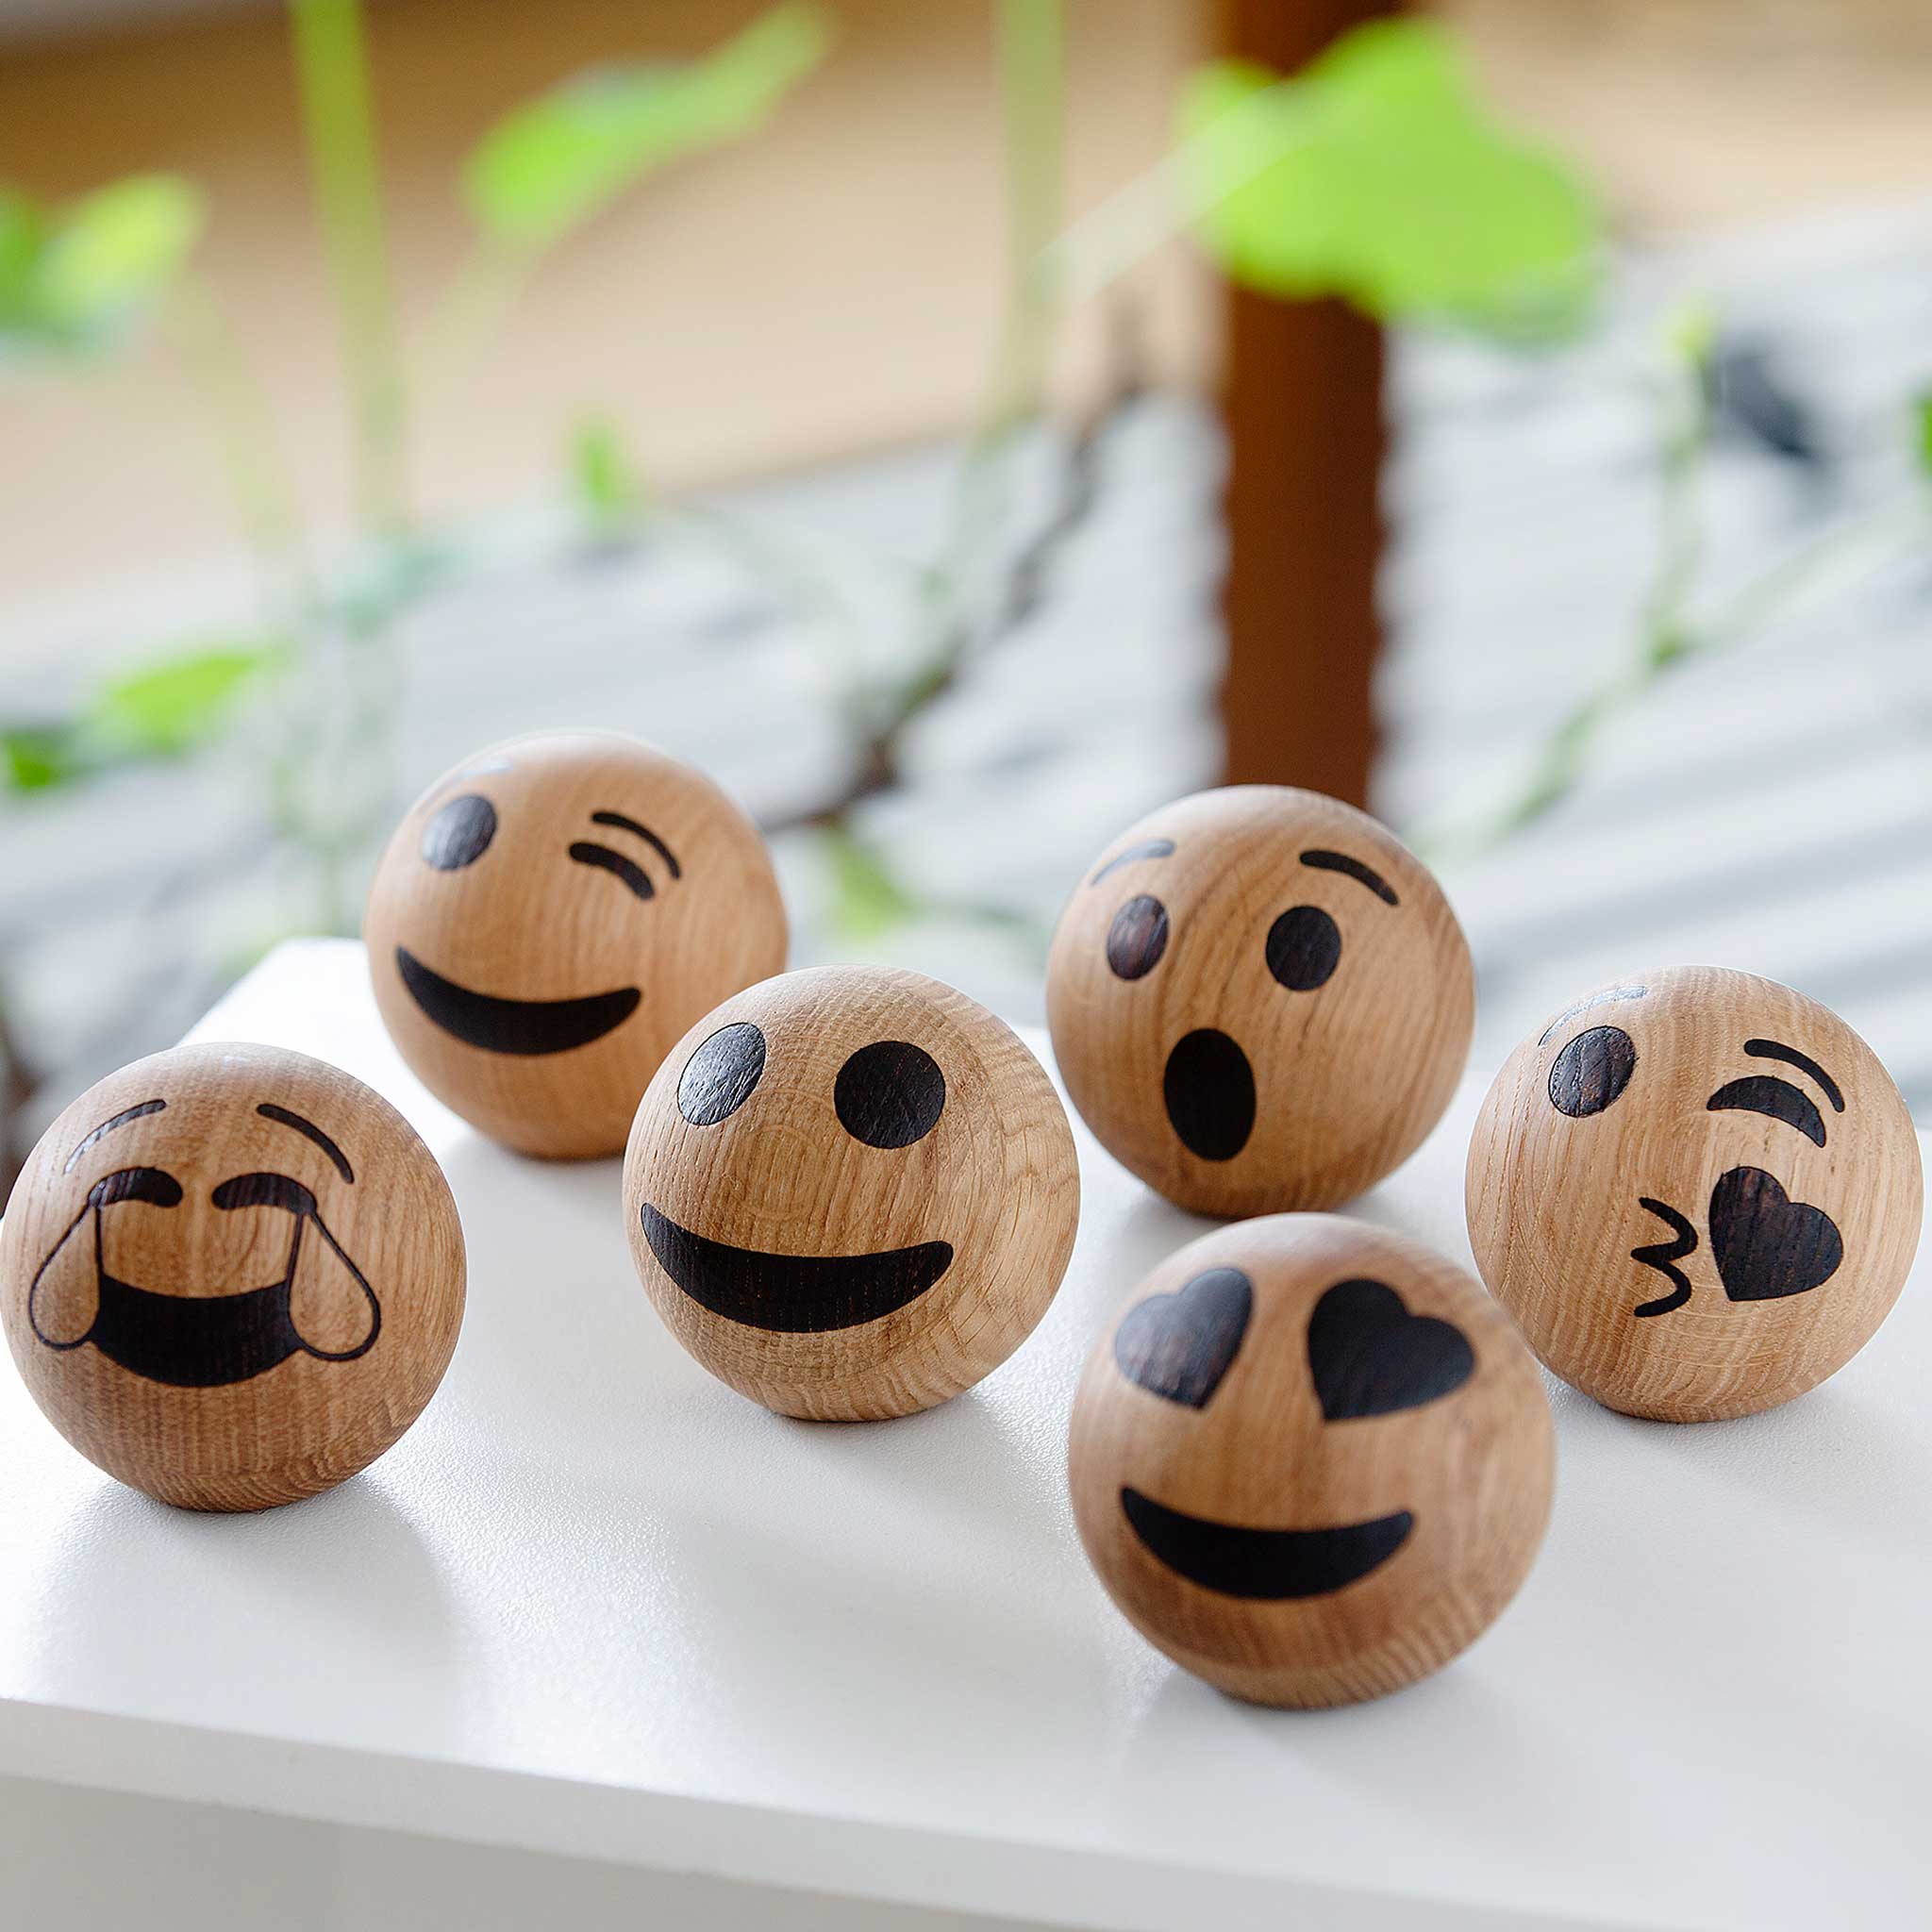 SPRING EMOTIONS | Trauriges Gesicht | Holz EMOTICONS | mencke&vagnby | Spring Copenhagen - Charles & Marie